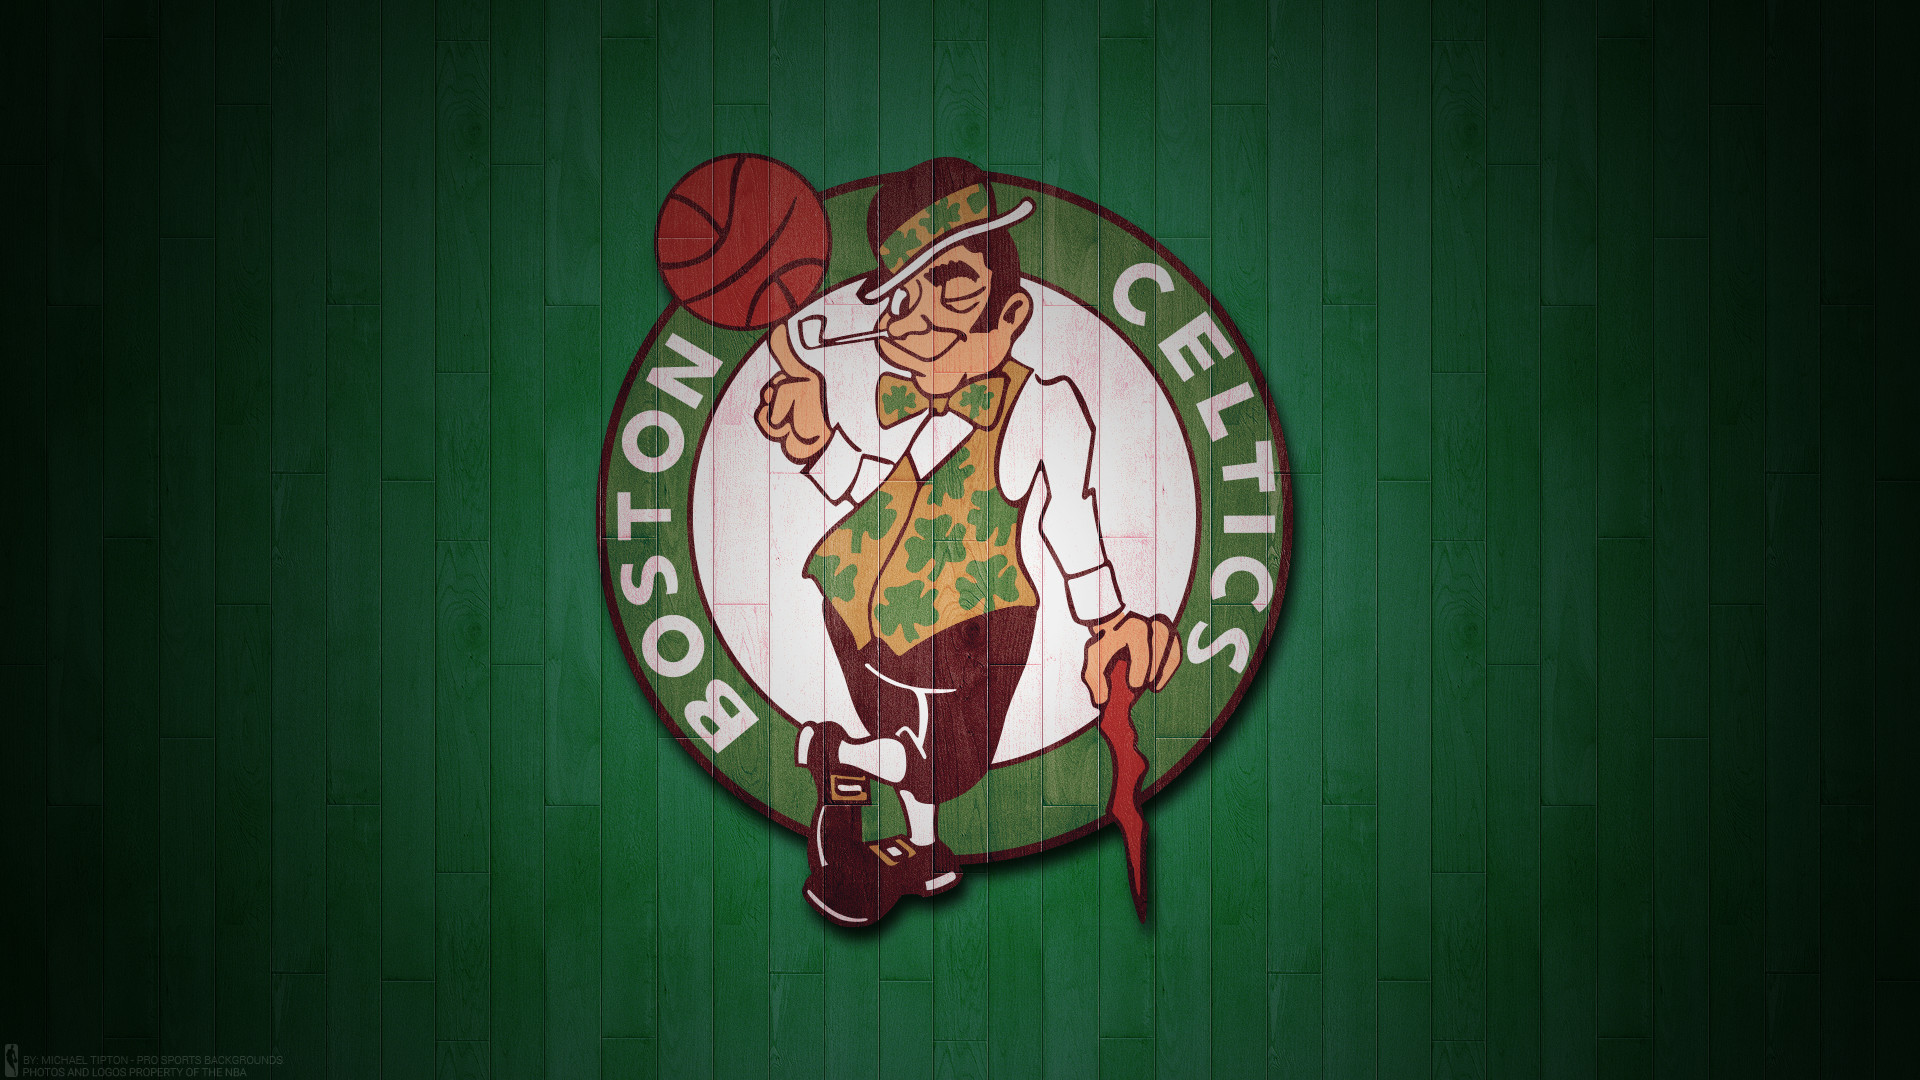 1920x1080 ... Boston Celtics 2017 nba basketball team logo hardwood wallpaper free  for mac and desktop pc computer